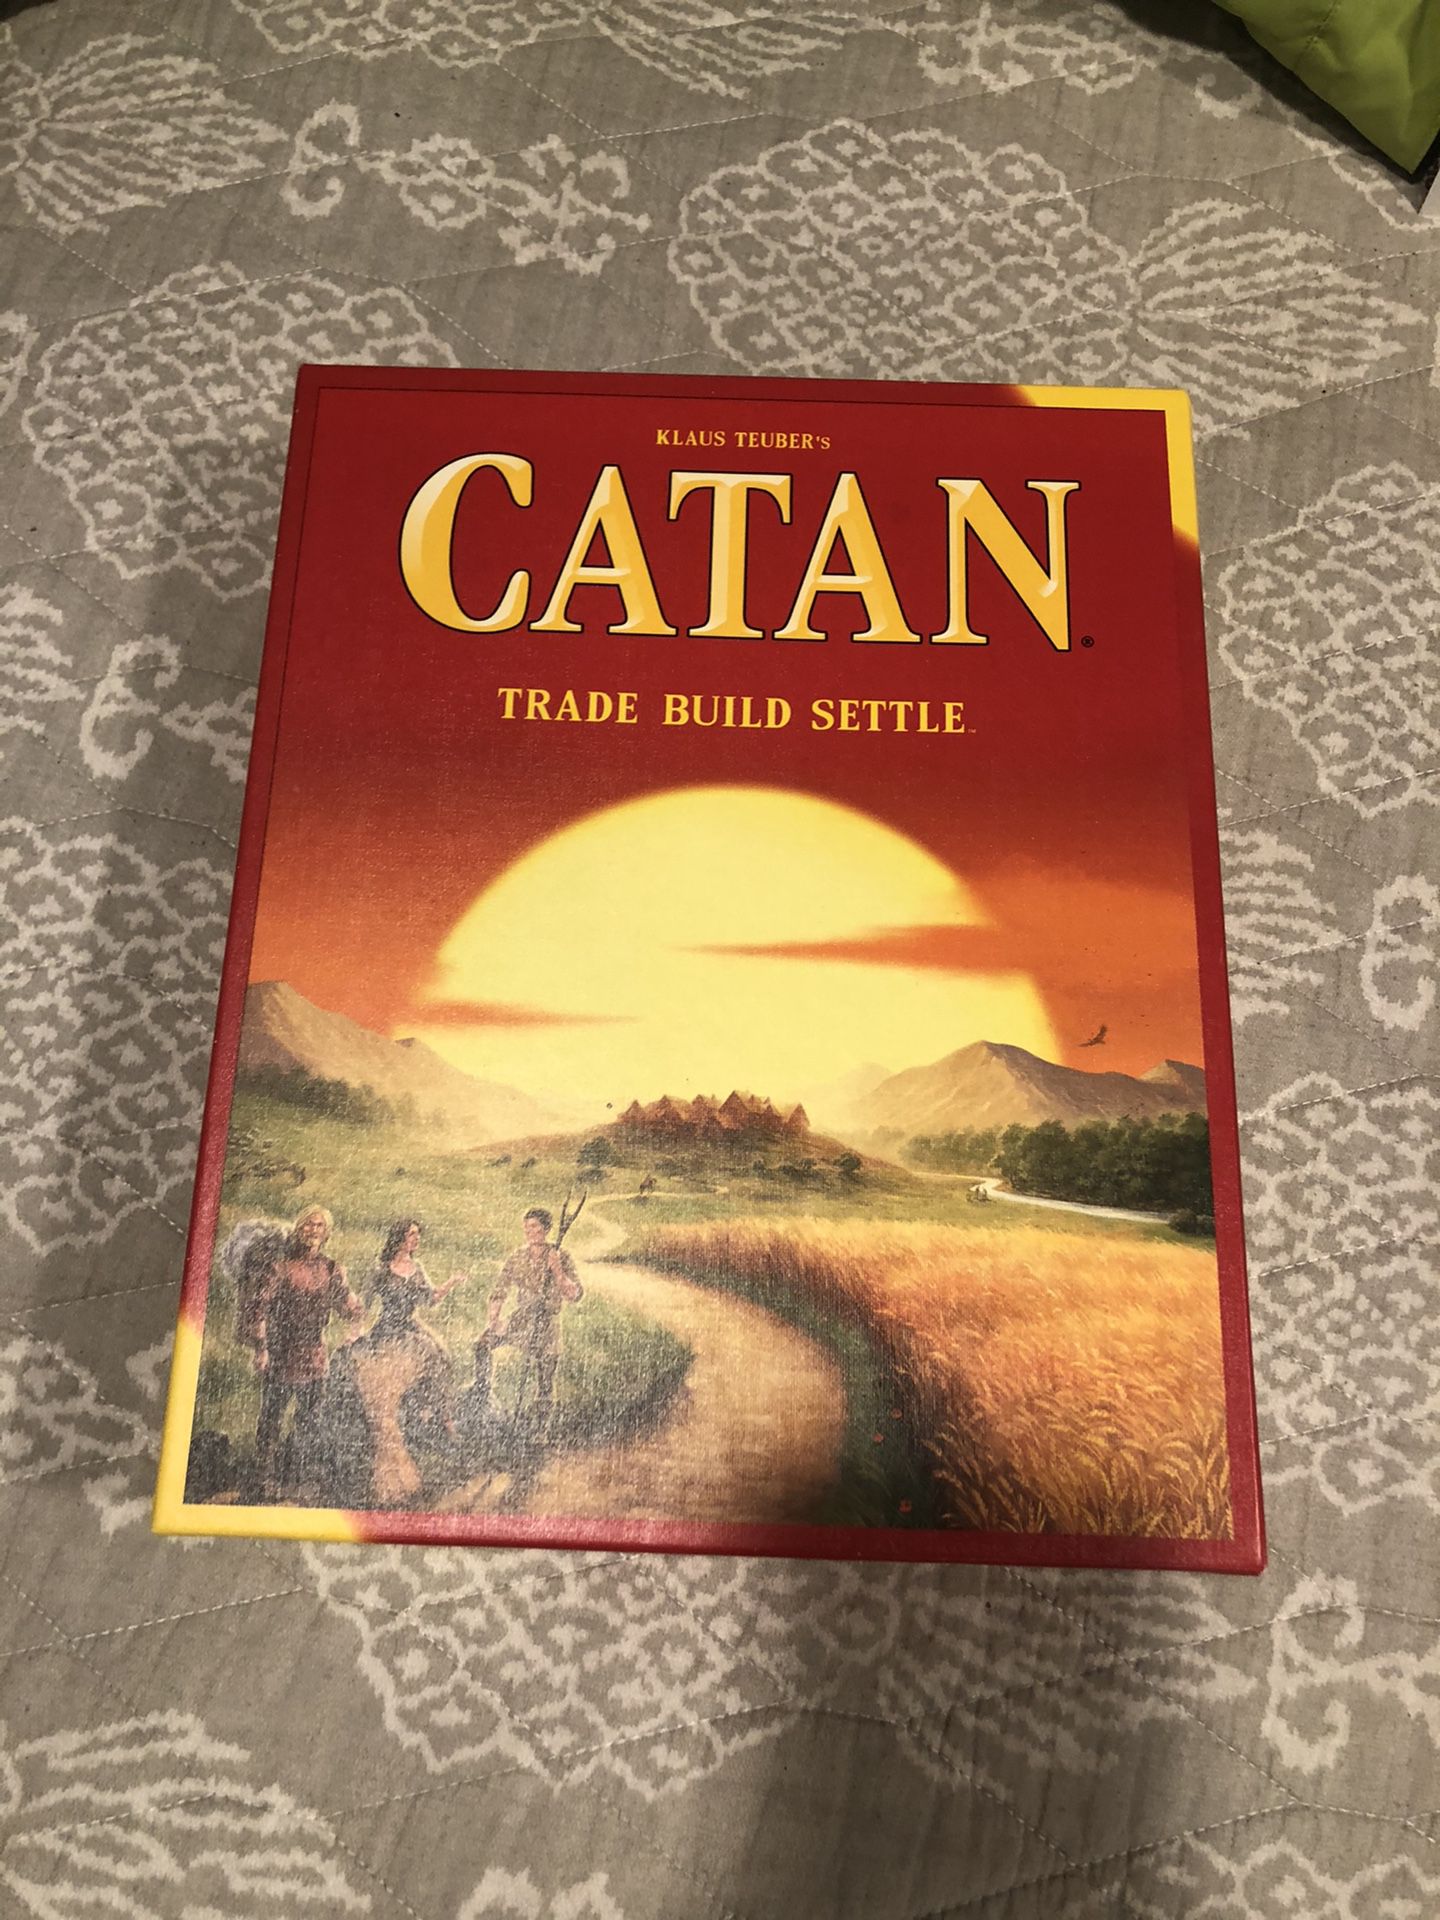 Catan board game